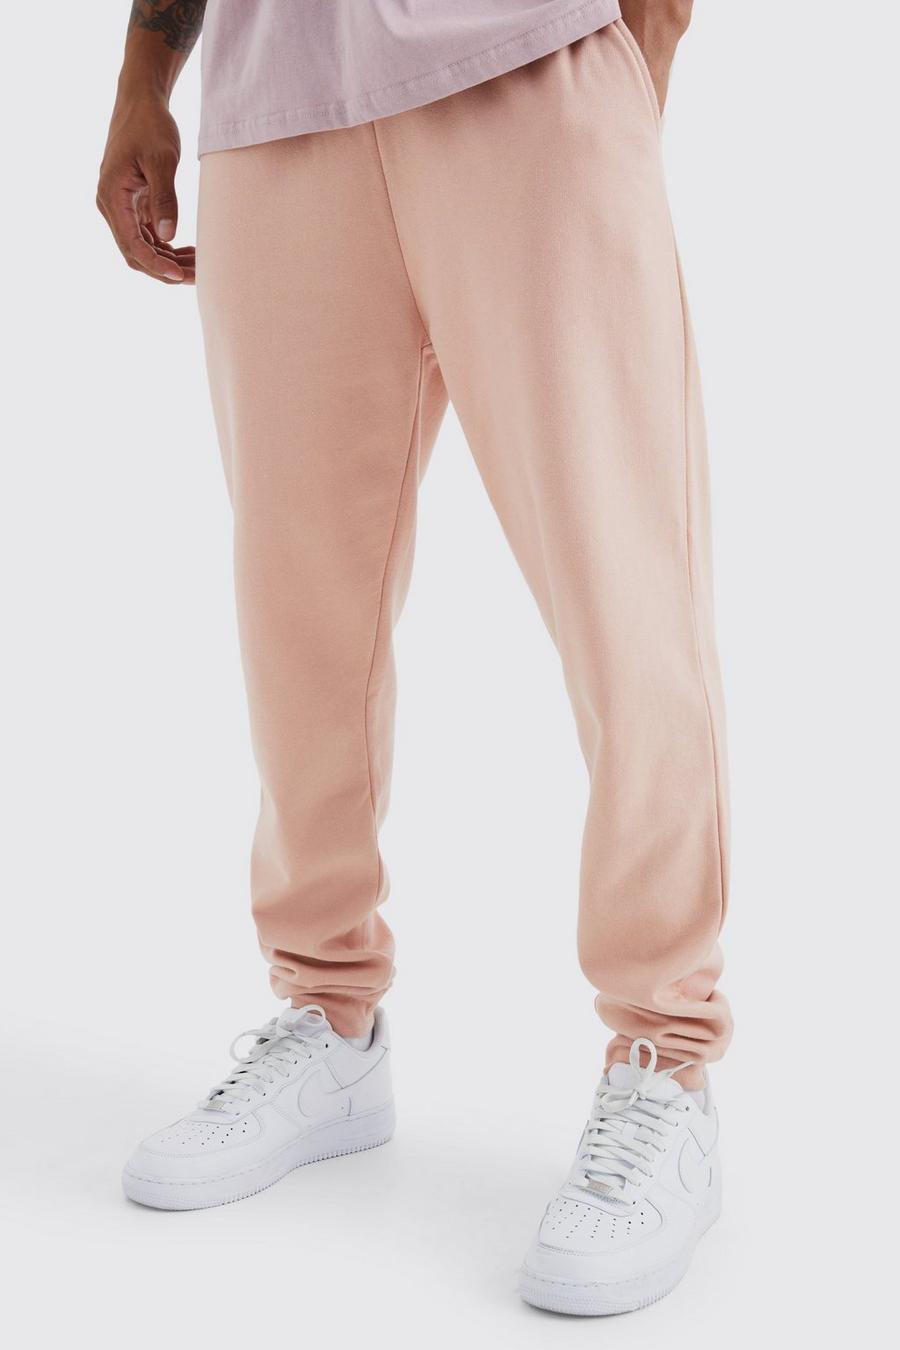 Pantaloni tuta oversize con grafica Pour Homme, Dusty pink